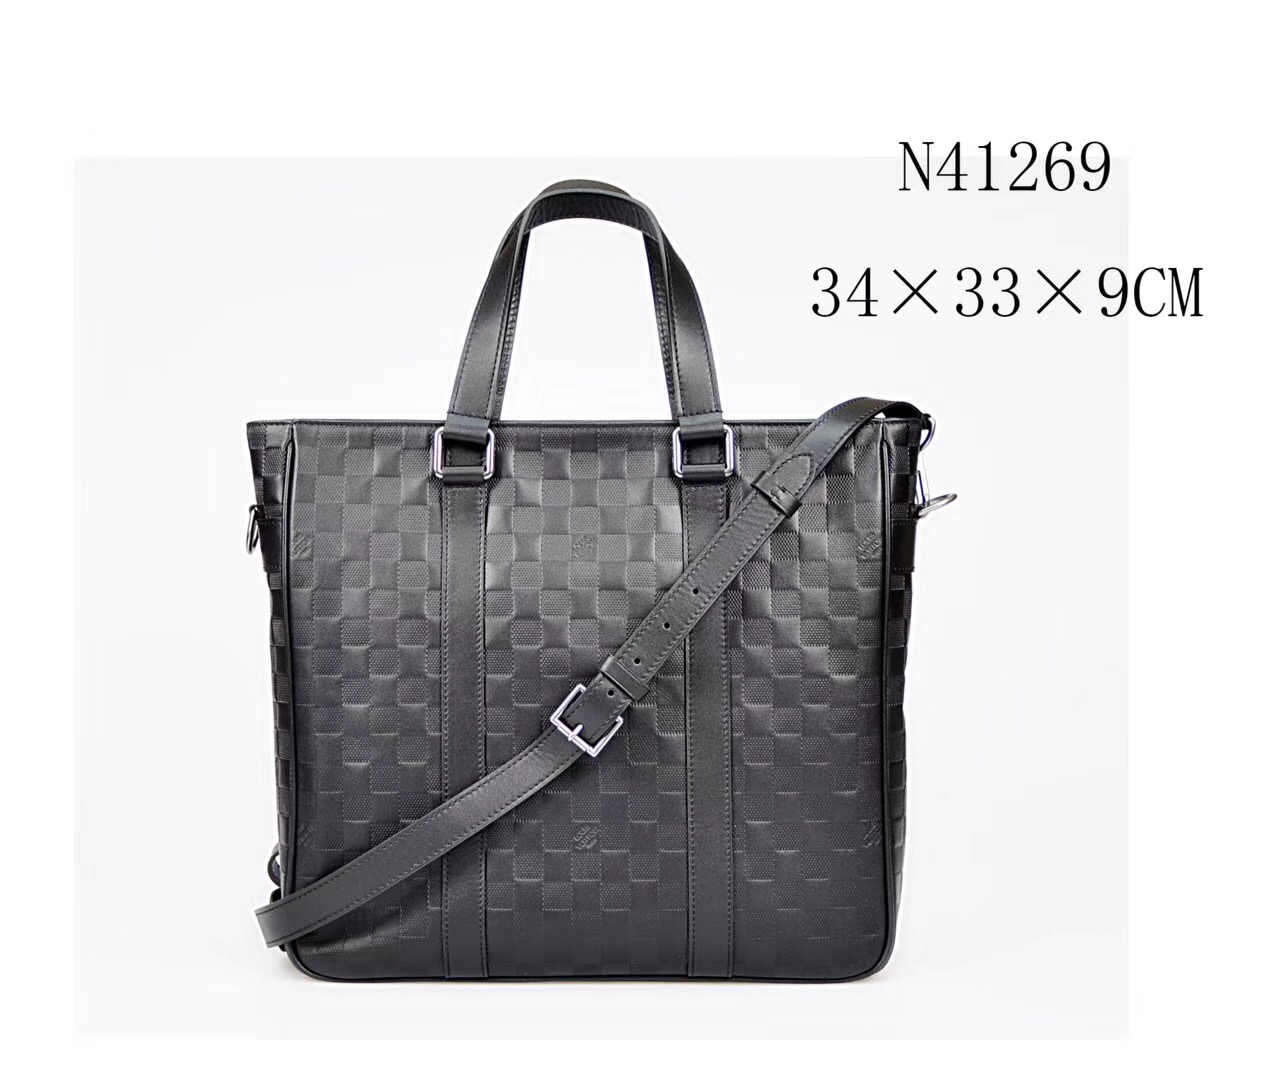 Men LV Louis Vuitton Damier Tote Leather Handbags N41269 bags Black